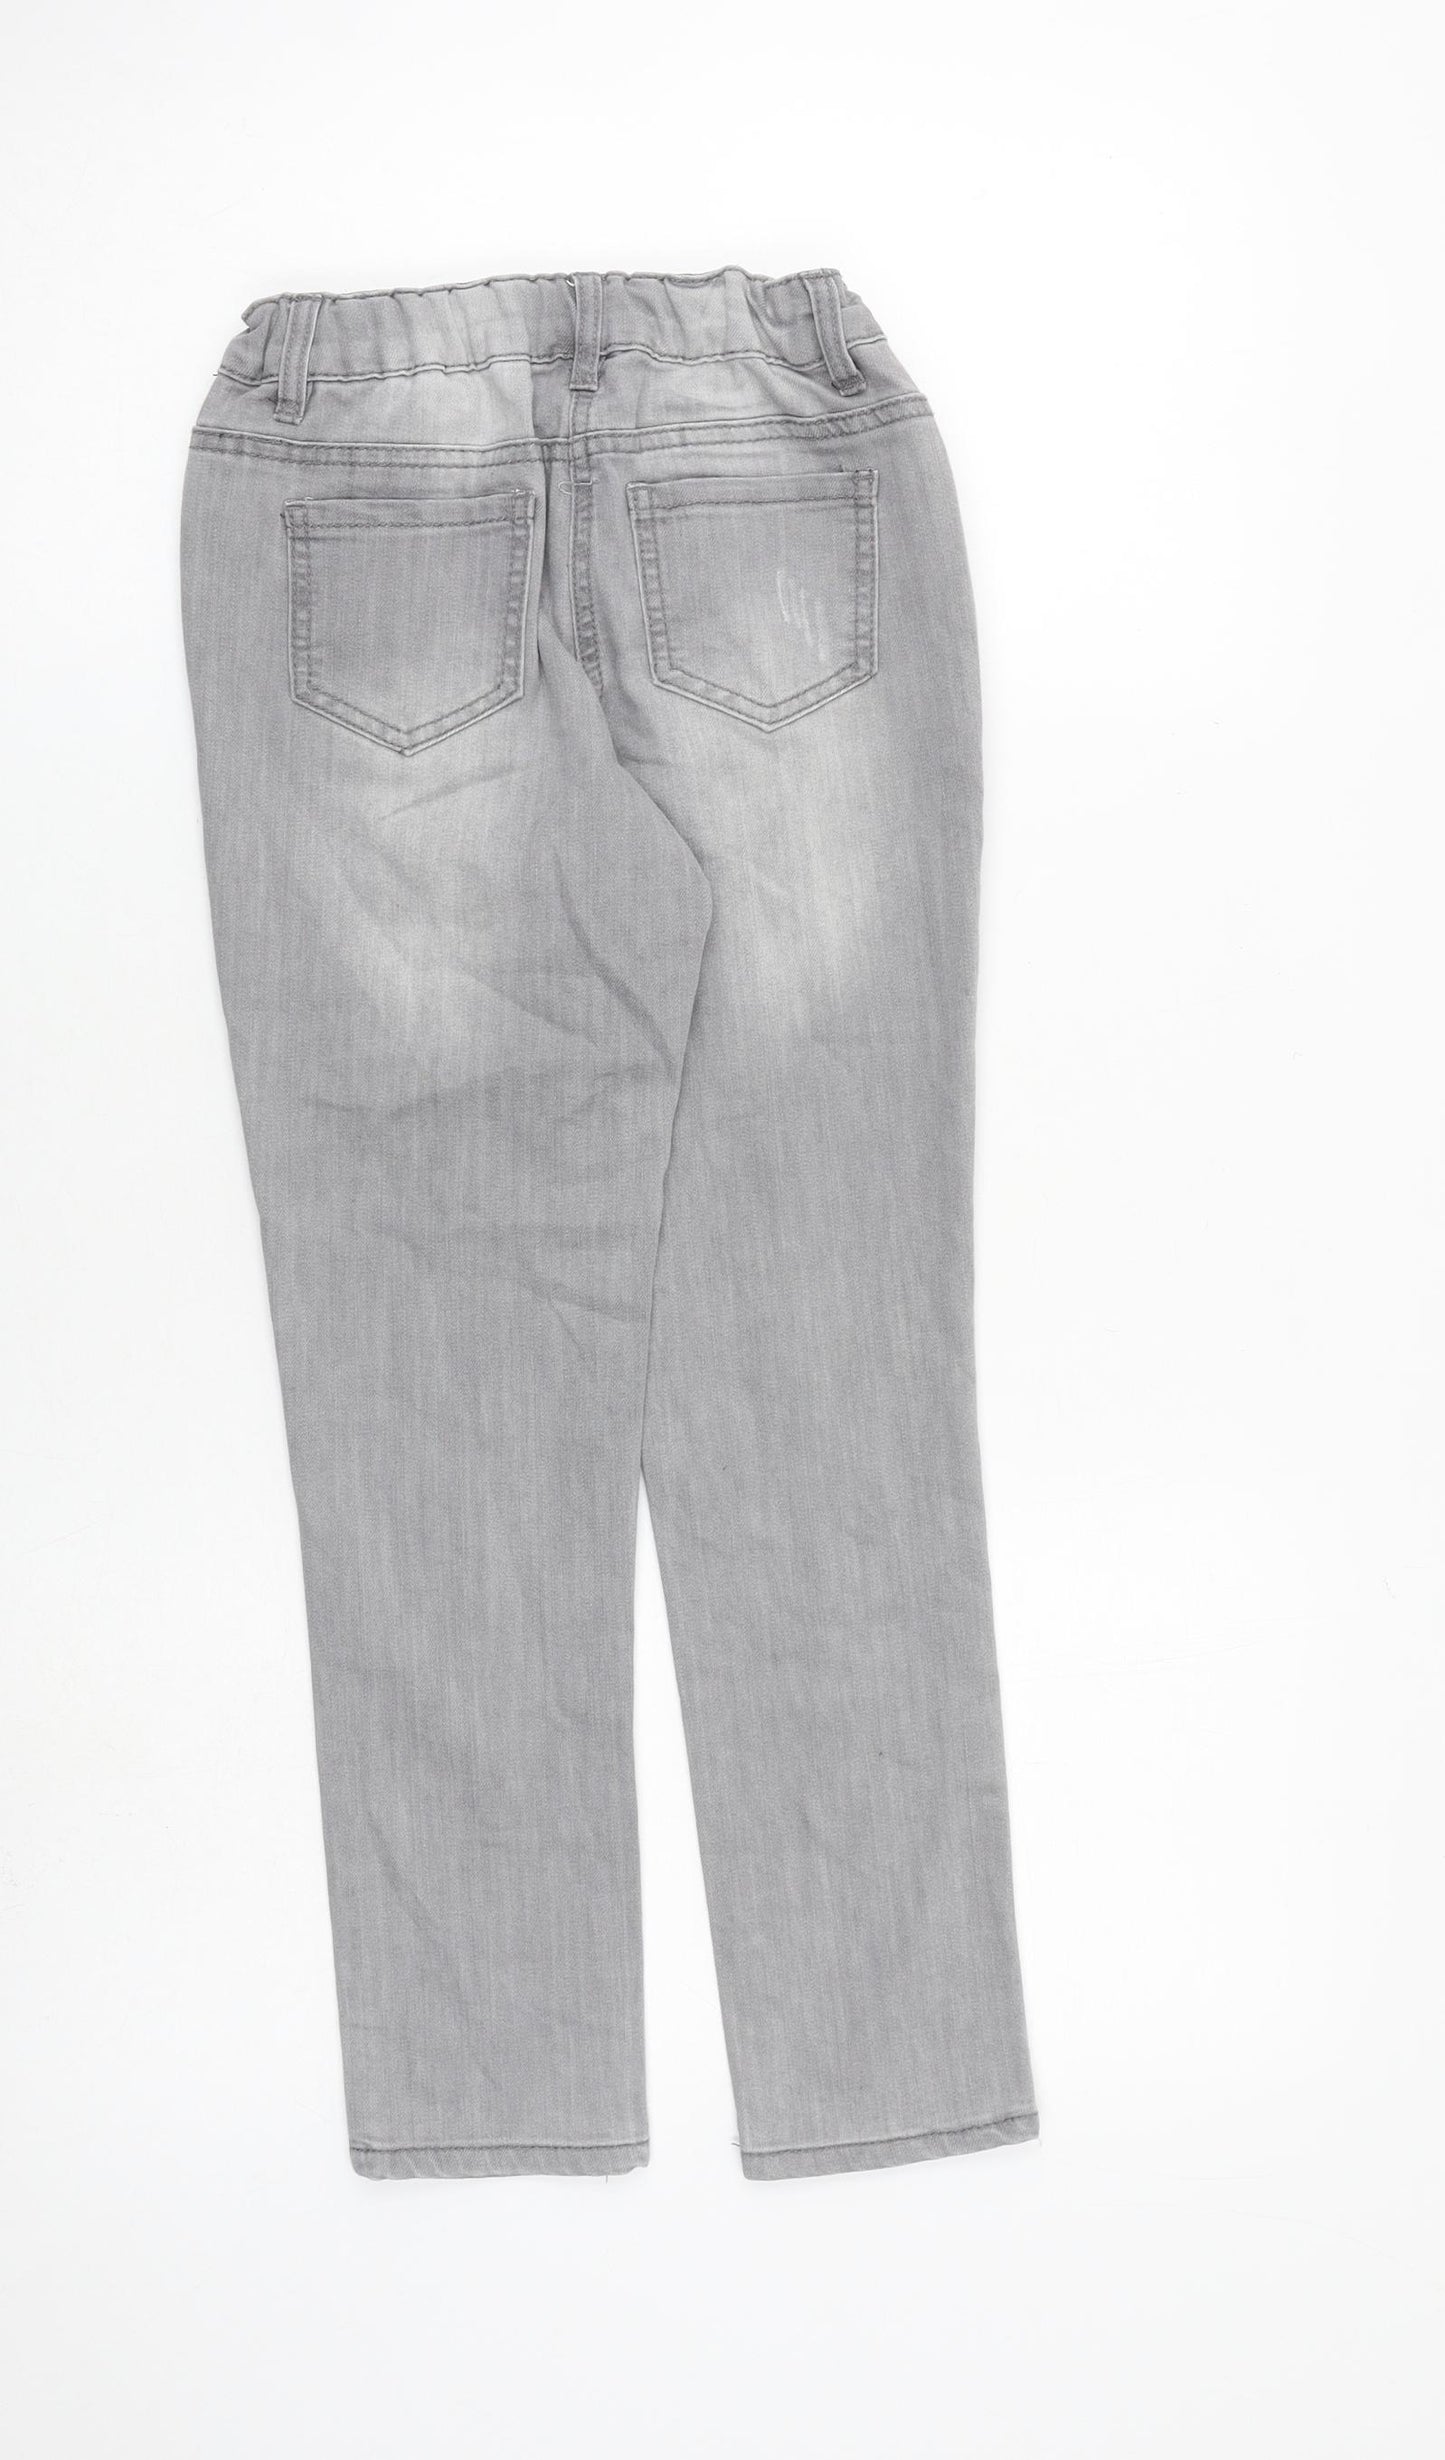 Denim & Co. Girls Grey Cotton Skinny Jeans Size 9-10 Years L23 in Regular Zip - Distressed